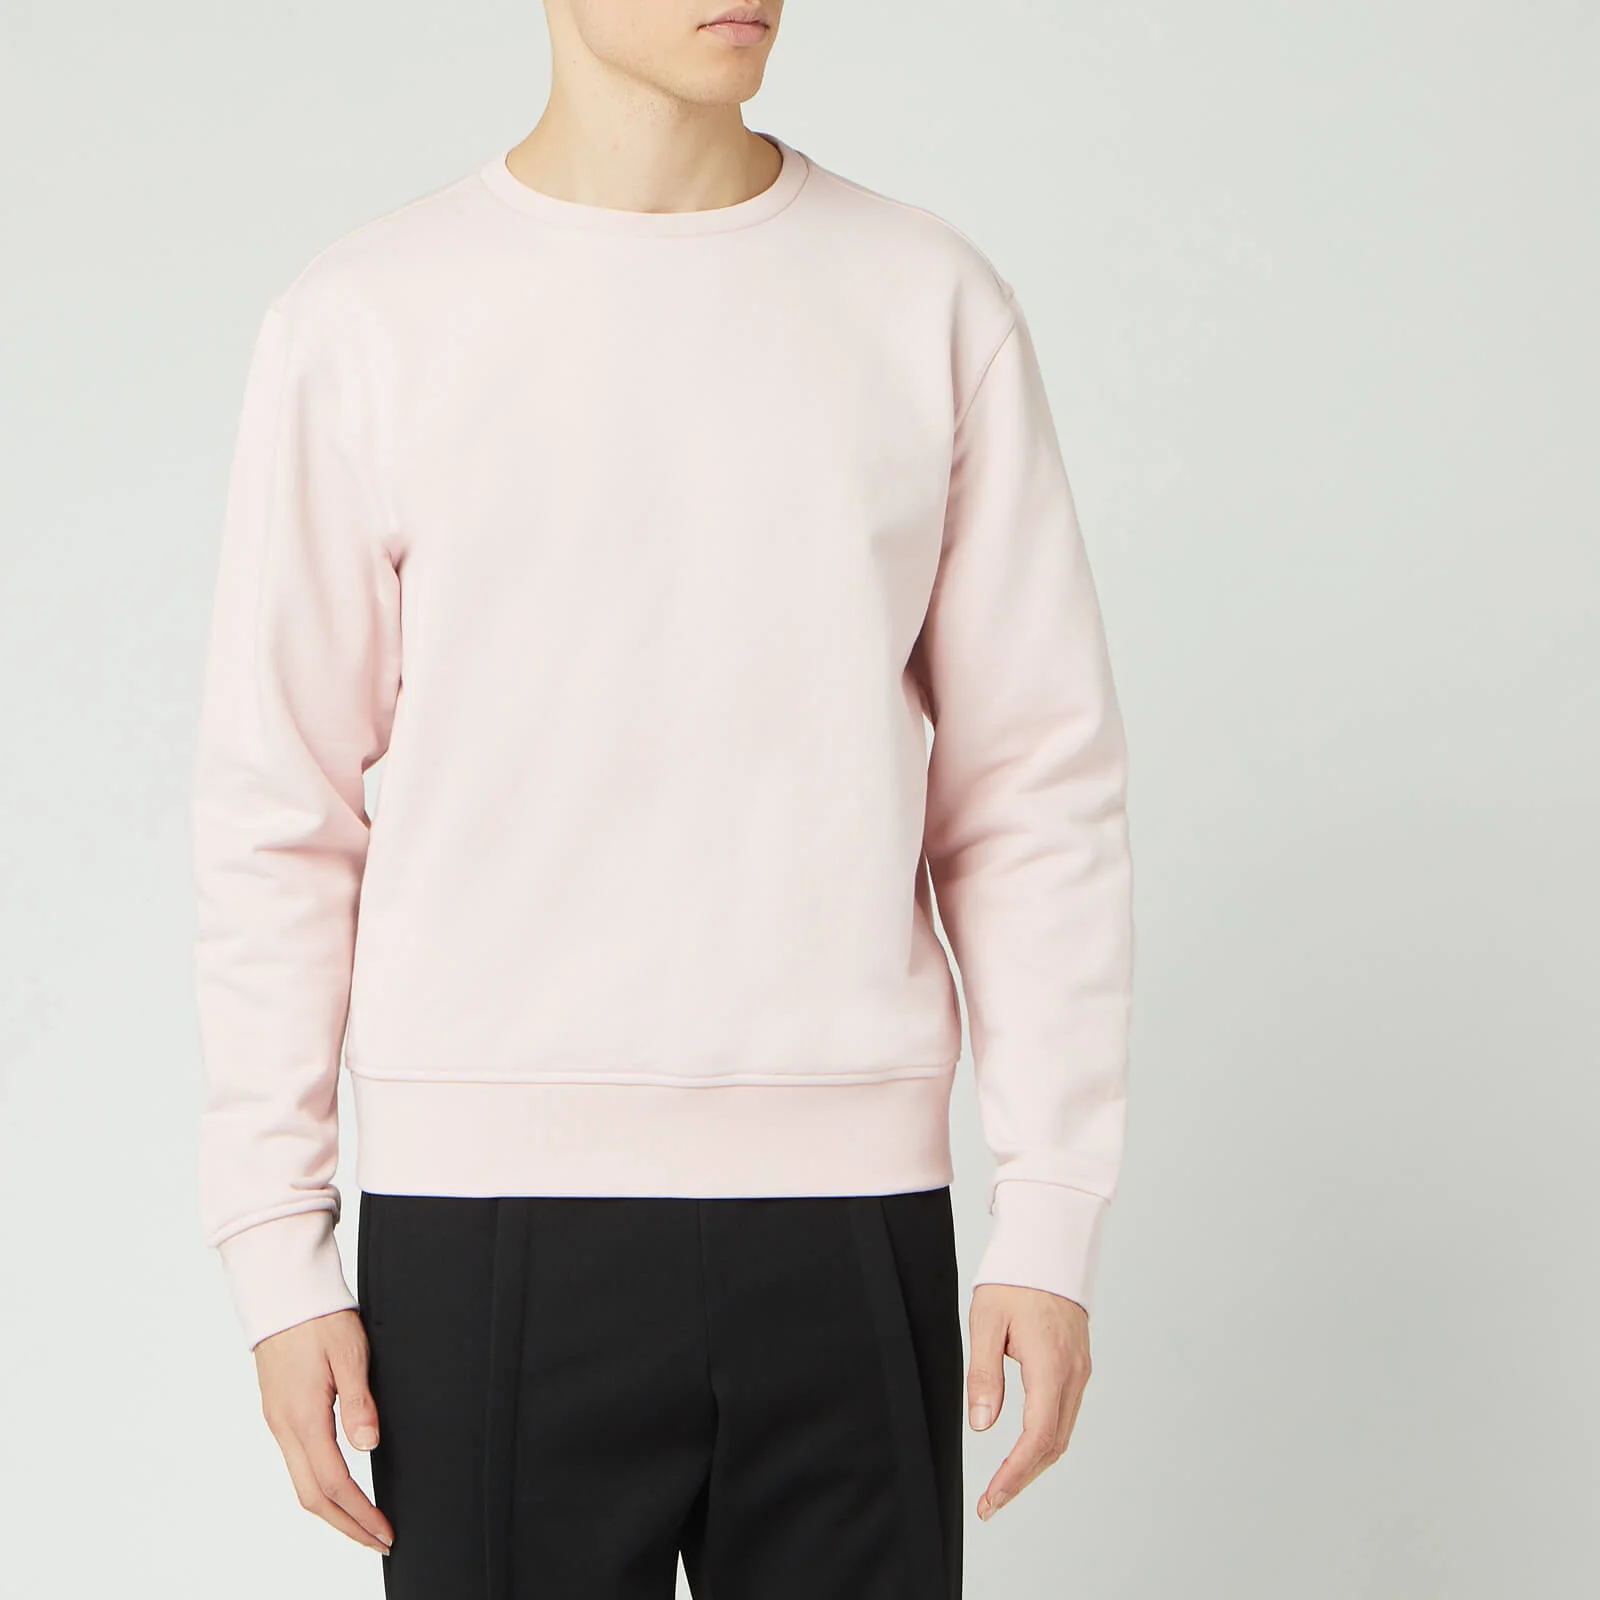 Maison Margiela Men's Elbow Patch Sweatshirt - Peony Pink Image 1